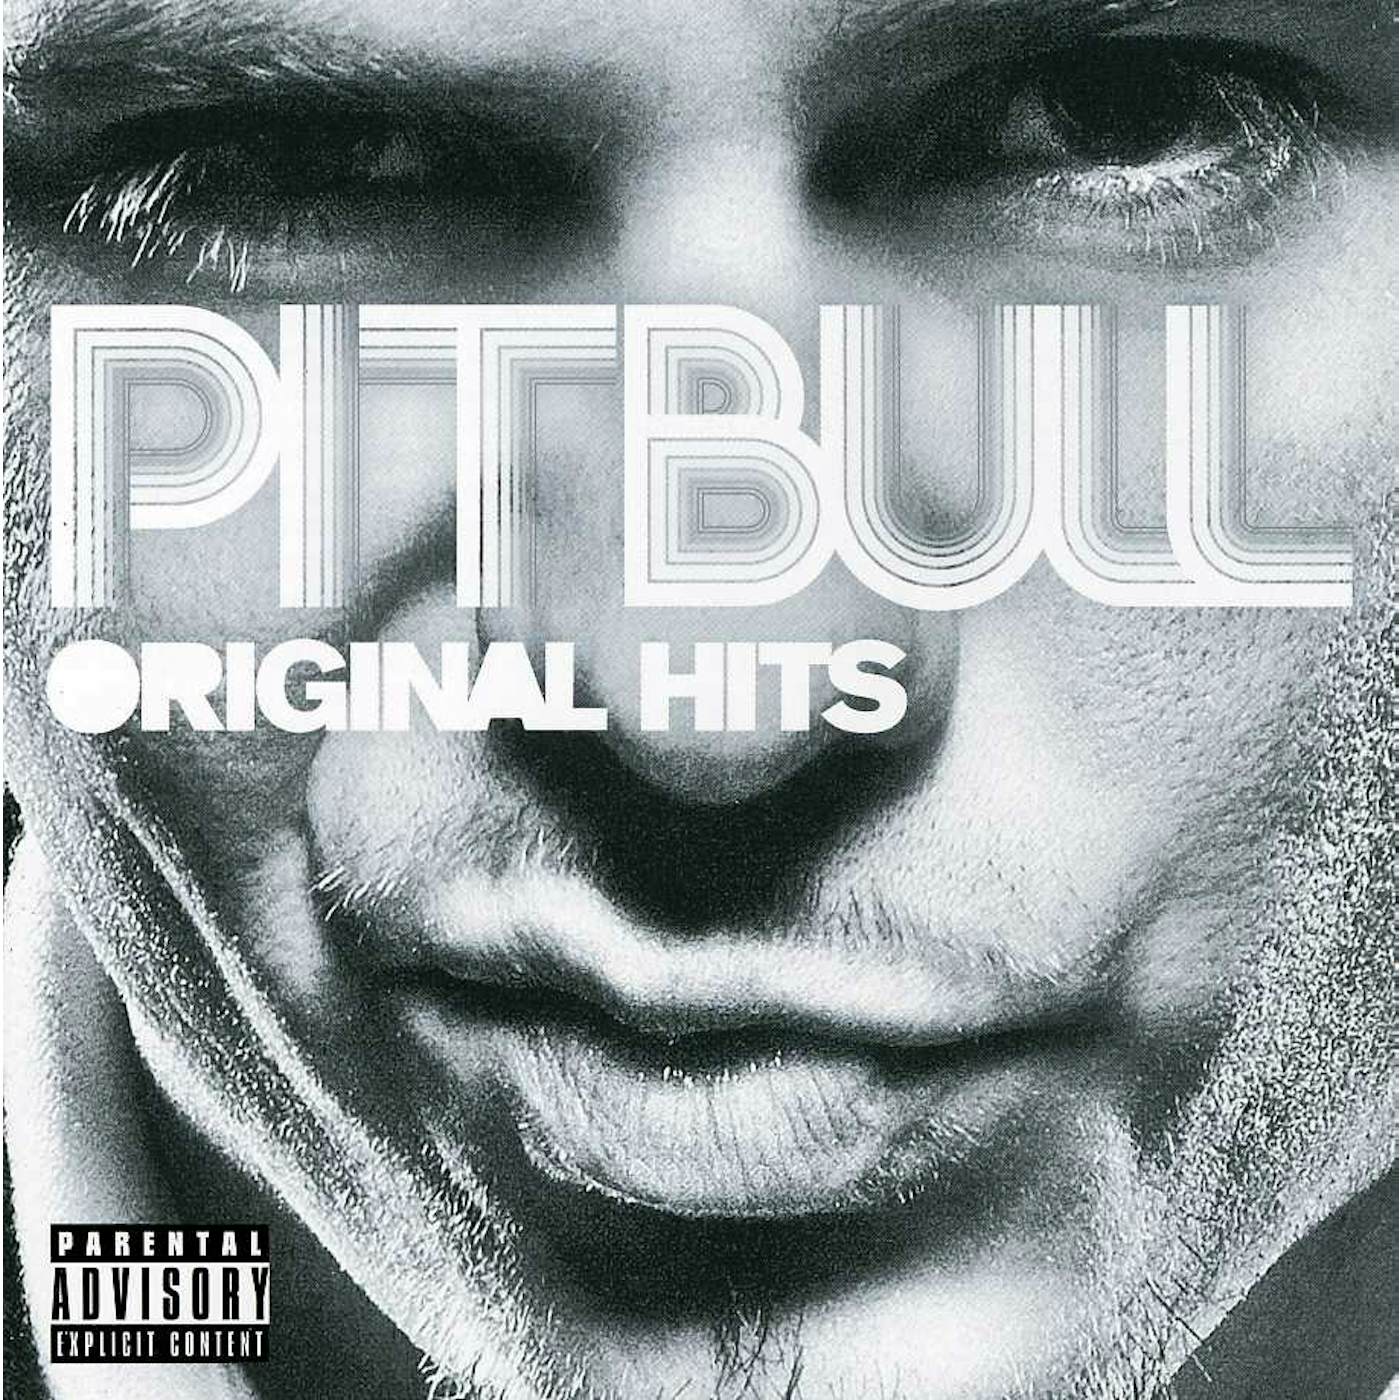 Pitbull ORIGINAL HITS CD